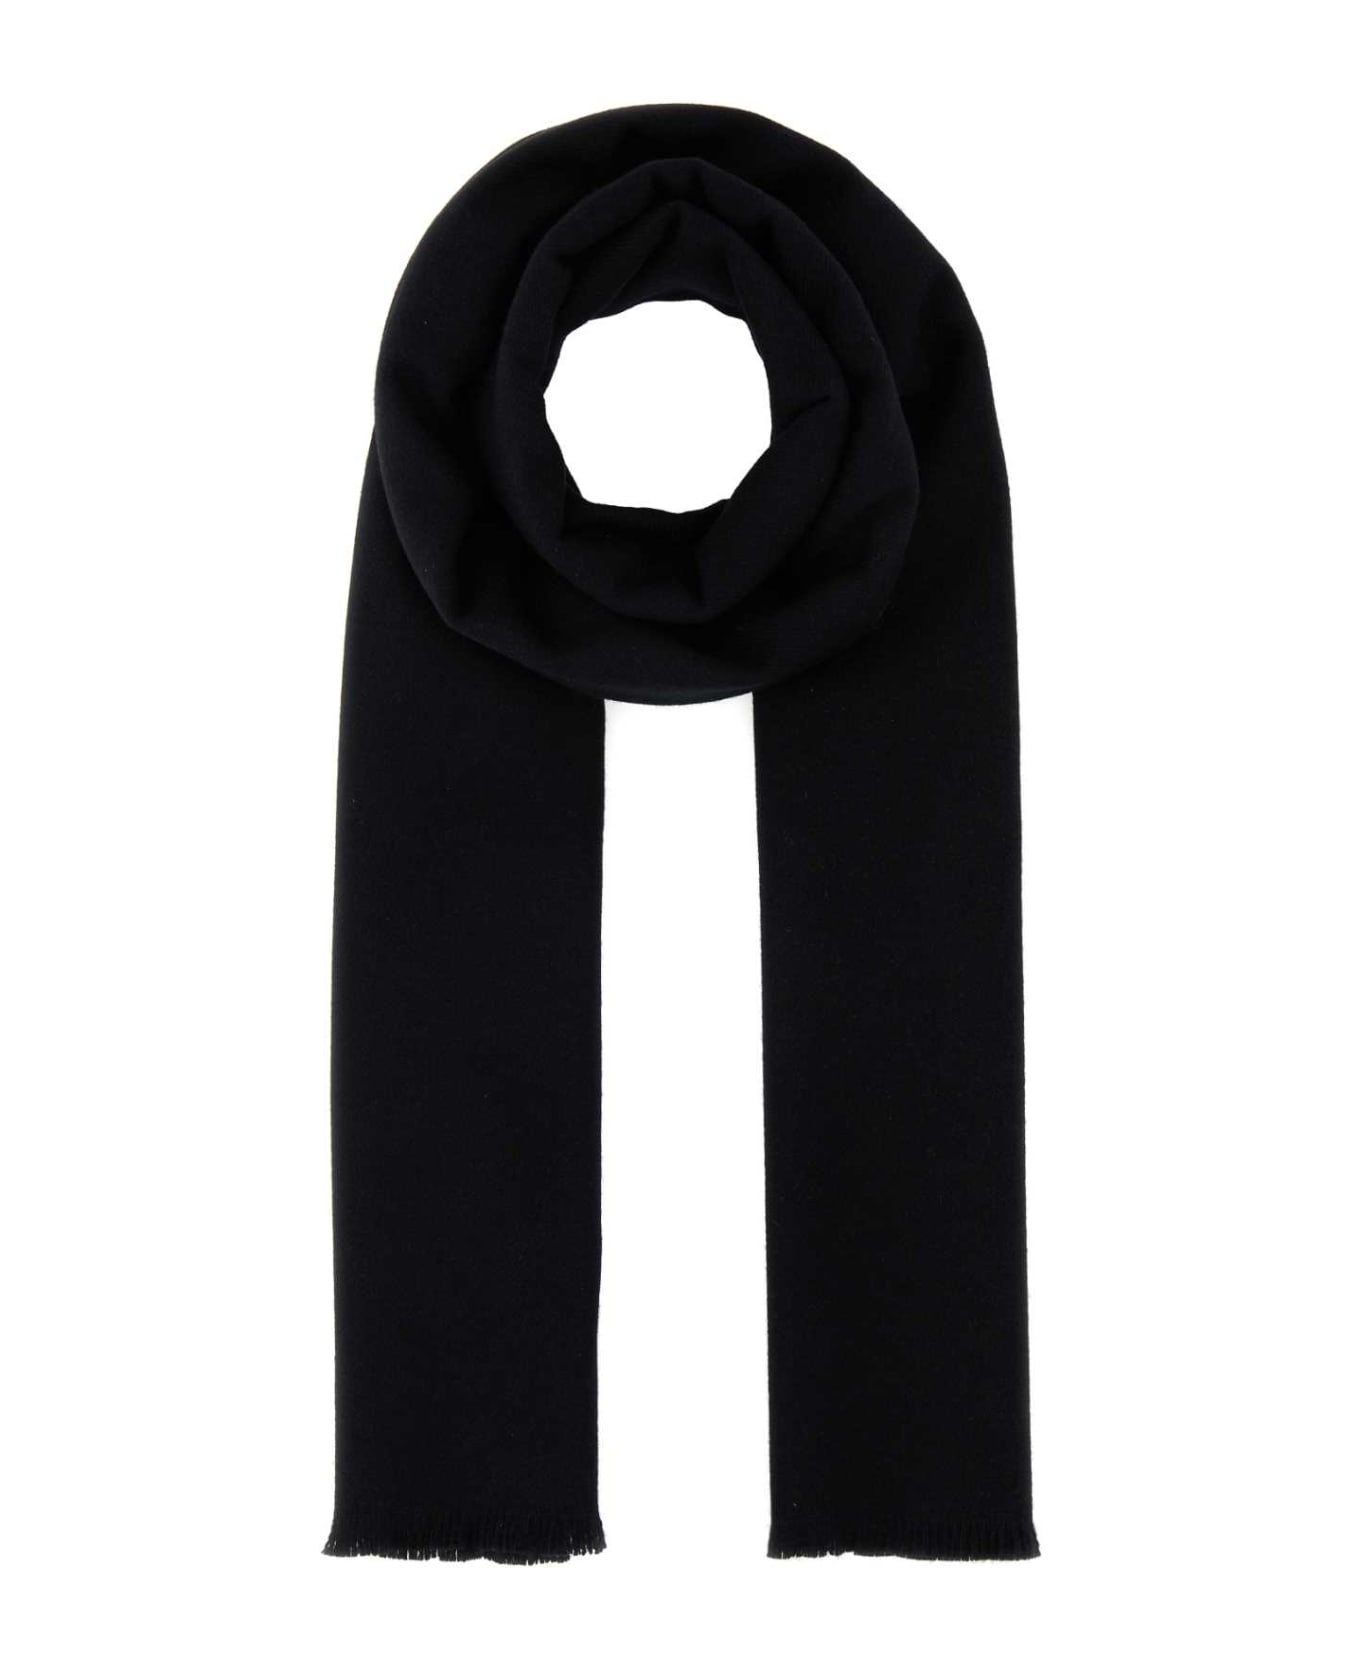 Valentino Garavani Black Wool Blend Scarf - NERO スカーフ